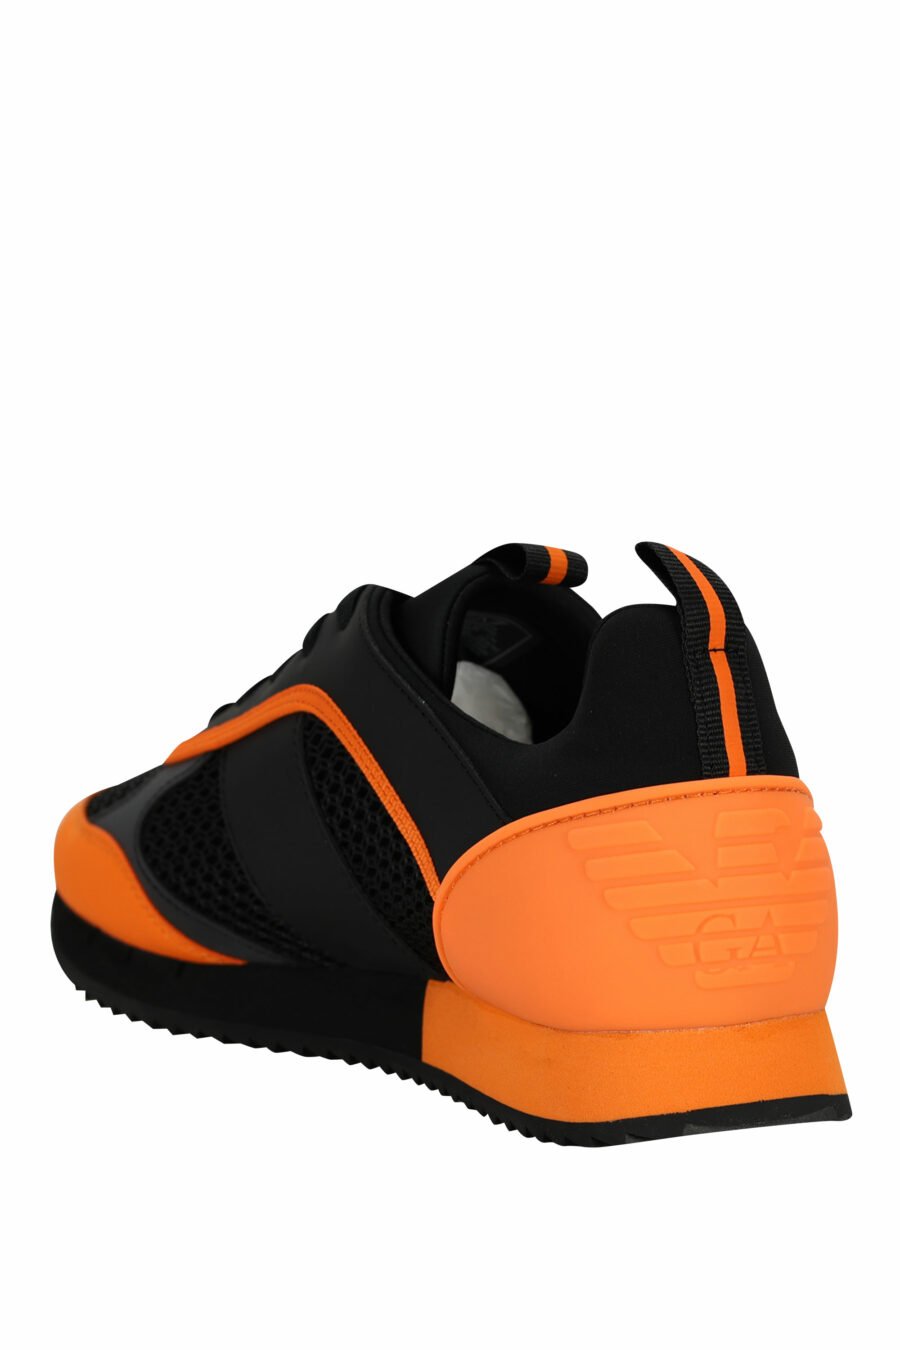 Zapatillas negras con logo "lux identity" naranja - 8057970798149 3